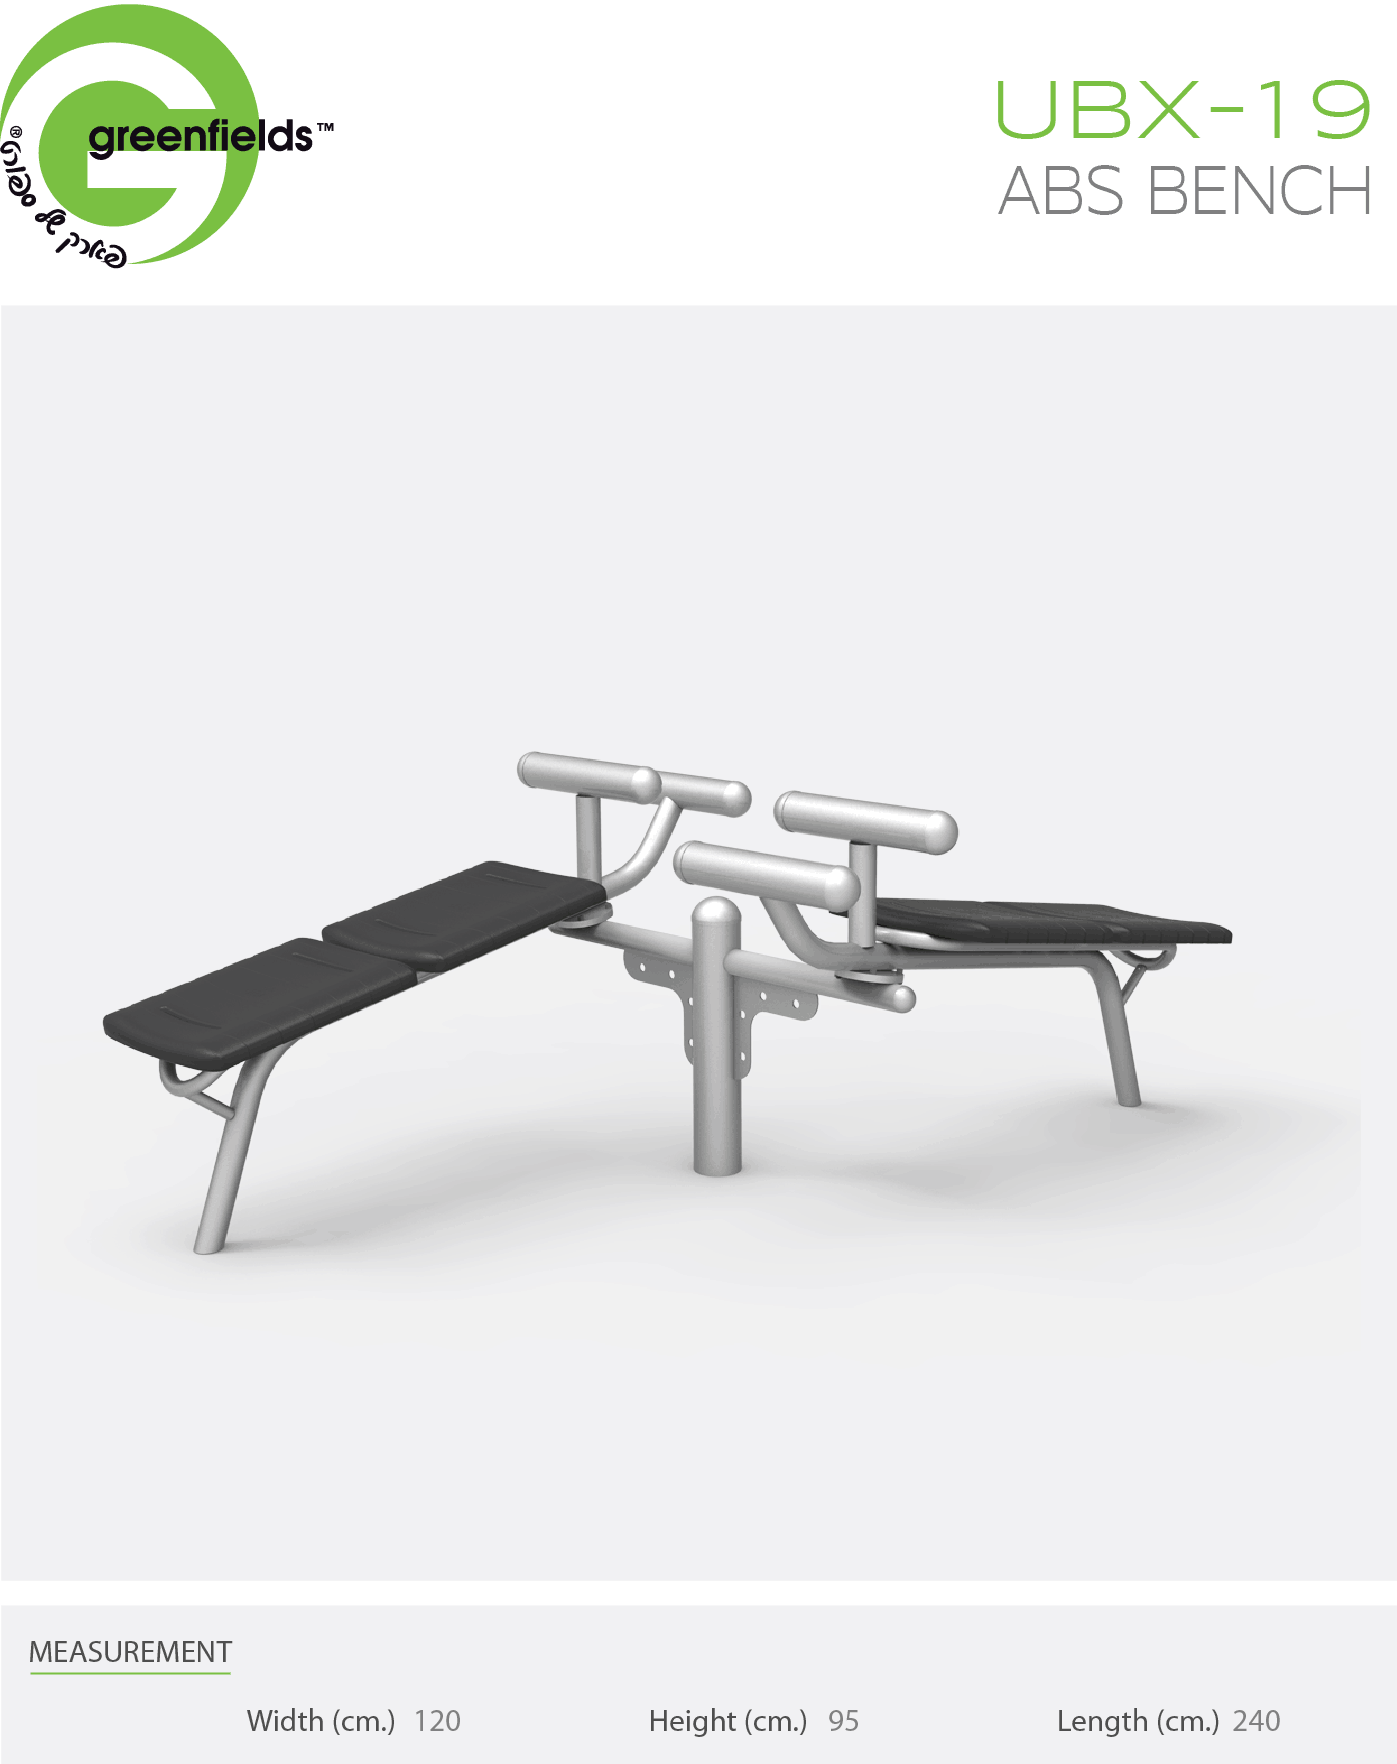 ubx-19 abs bench - אורבניקס - מתקן כושר - ספות עליית בטן זוגי